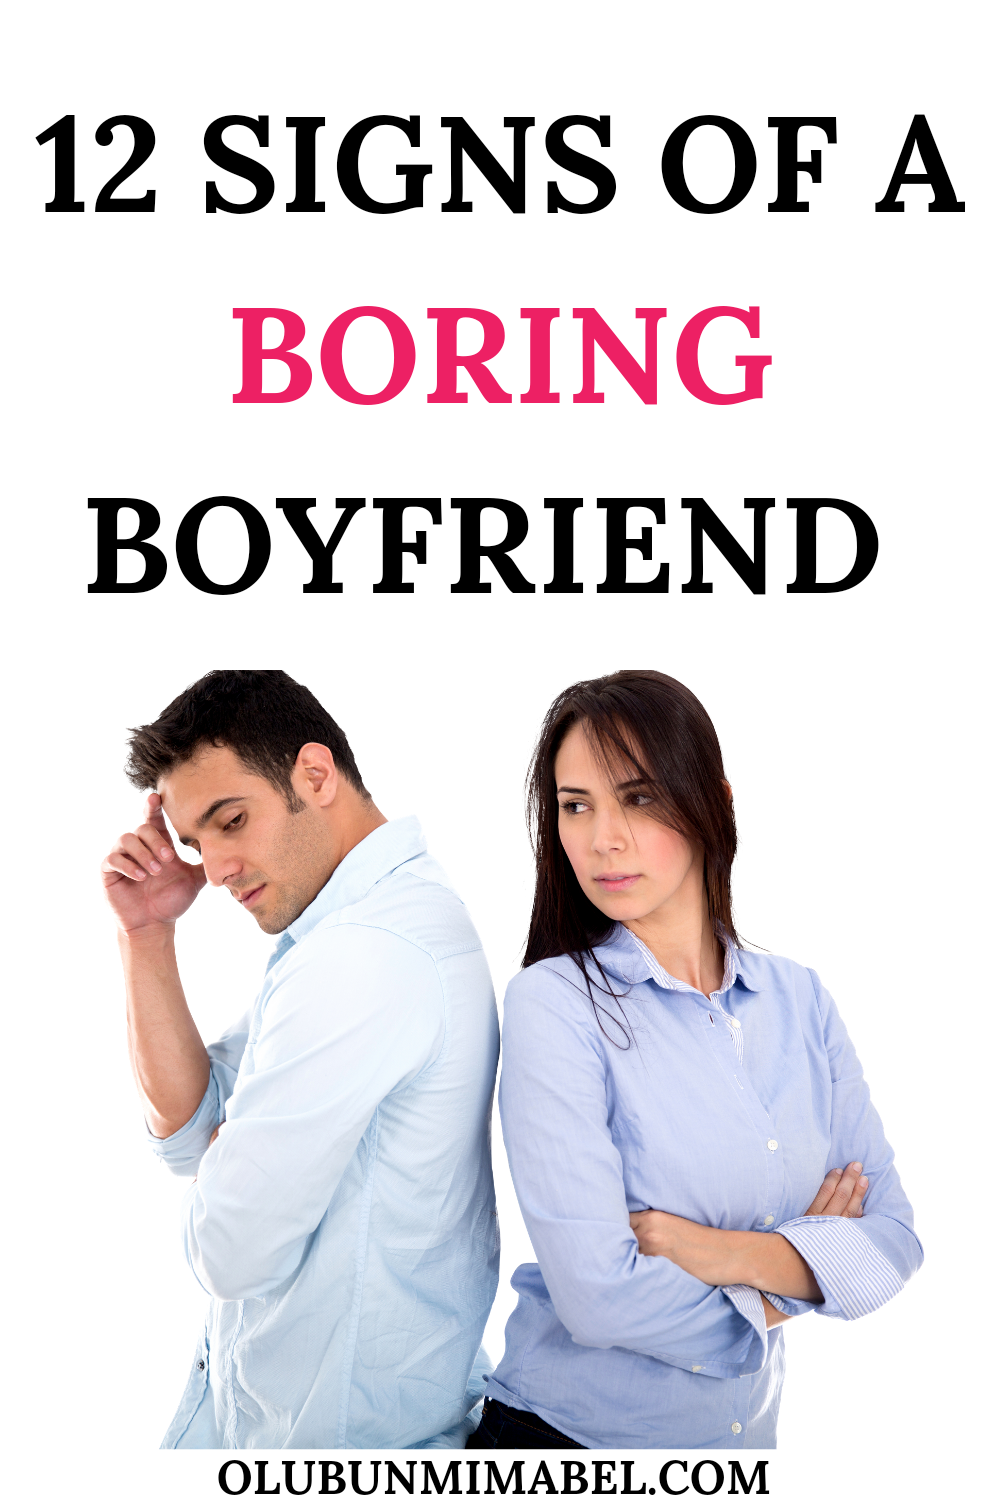 Signs of a Boring Boyfriend